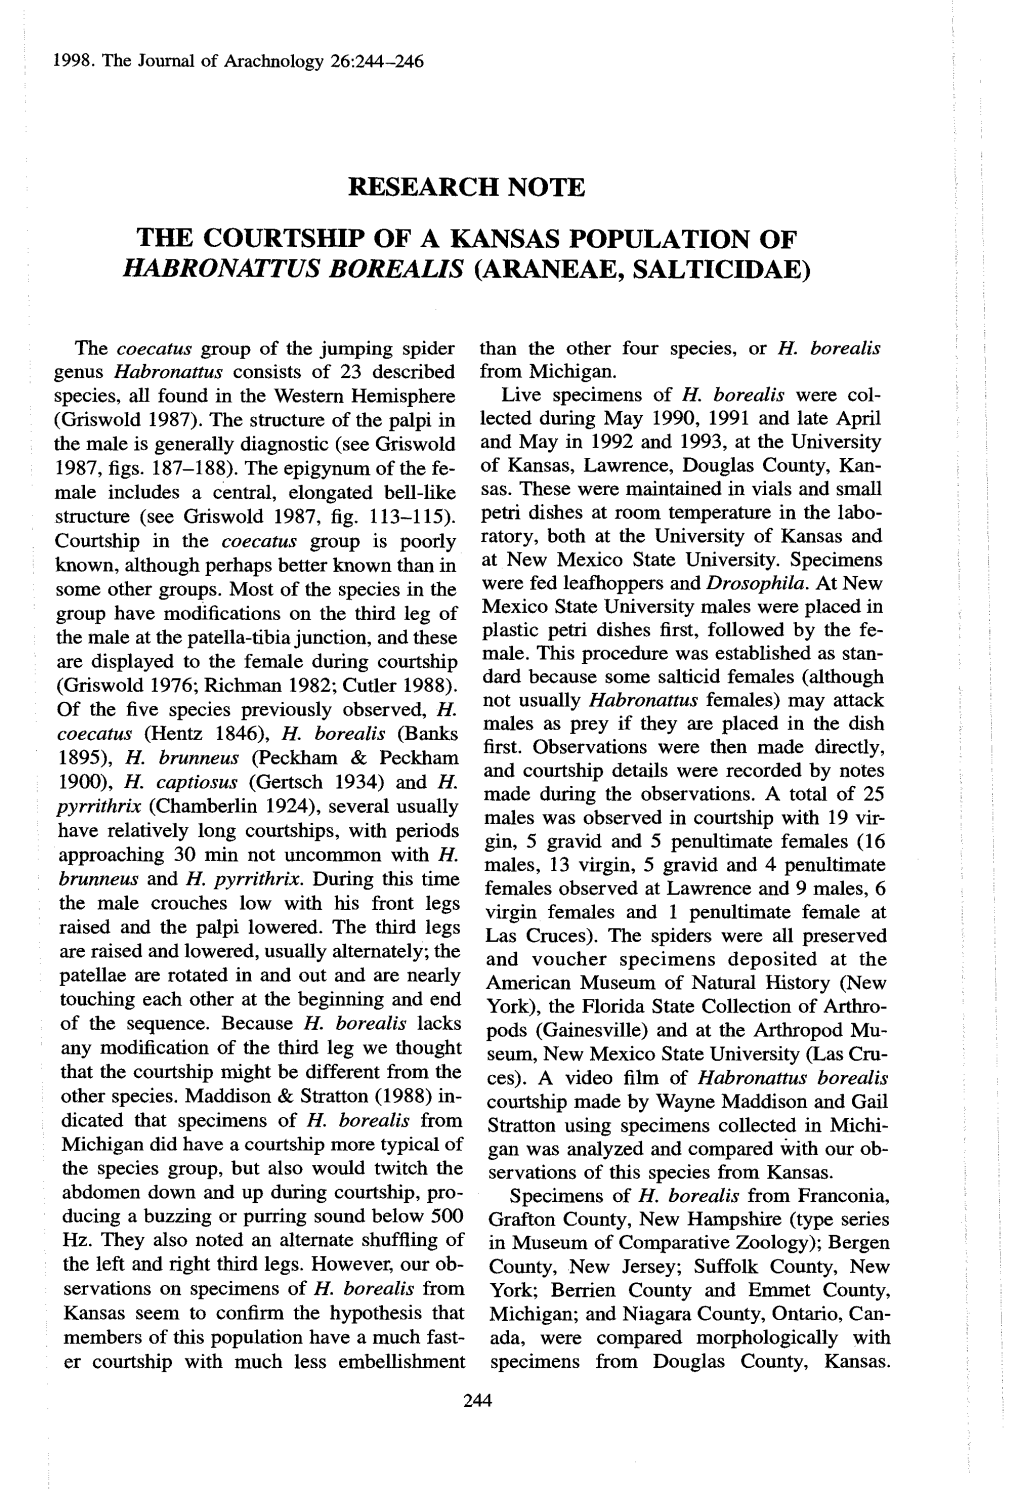 Research Note the Courtship of a Kansas Population of Habronattus Borealis (Araneae, Salticidae)